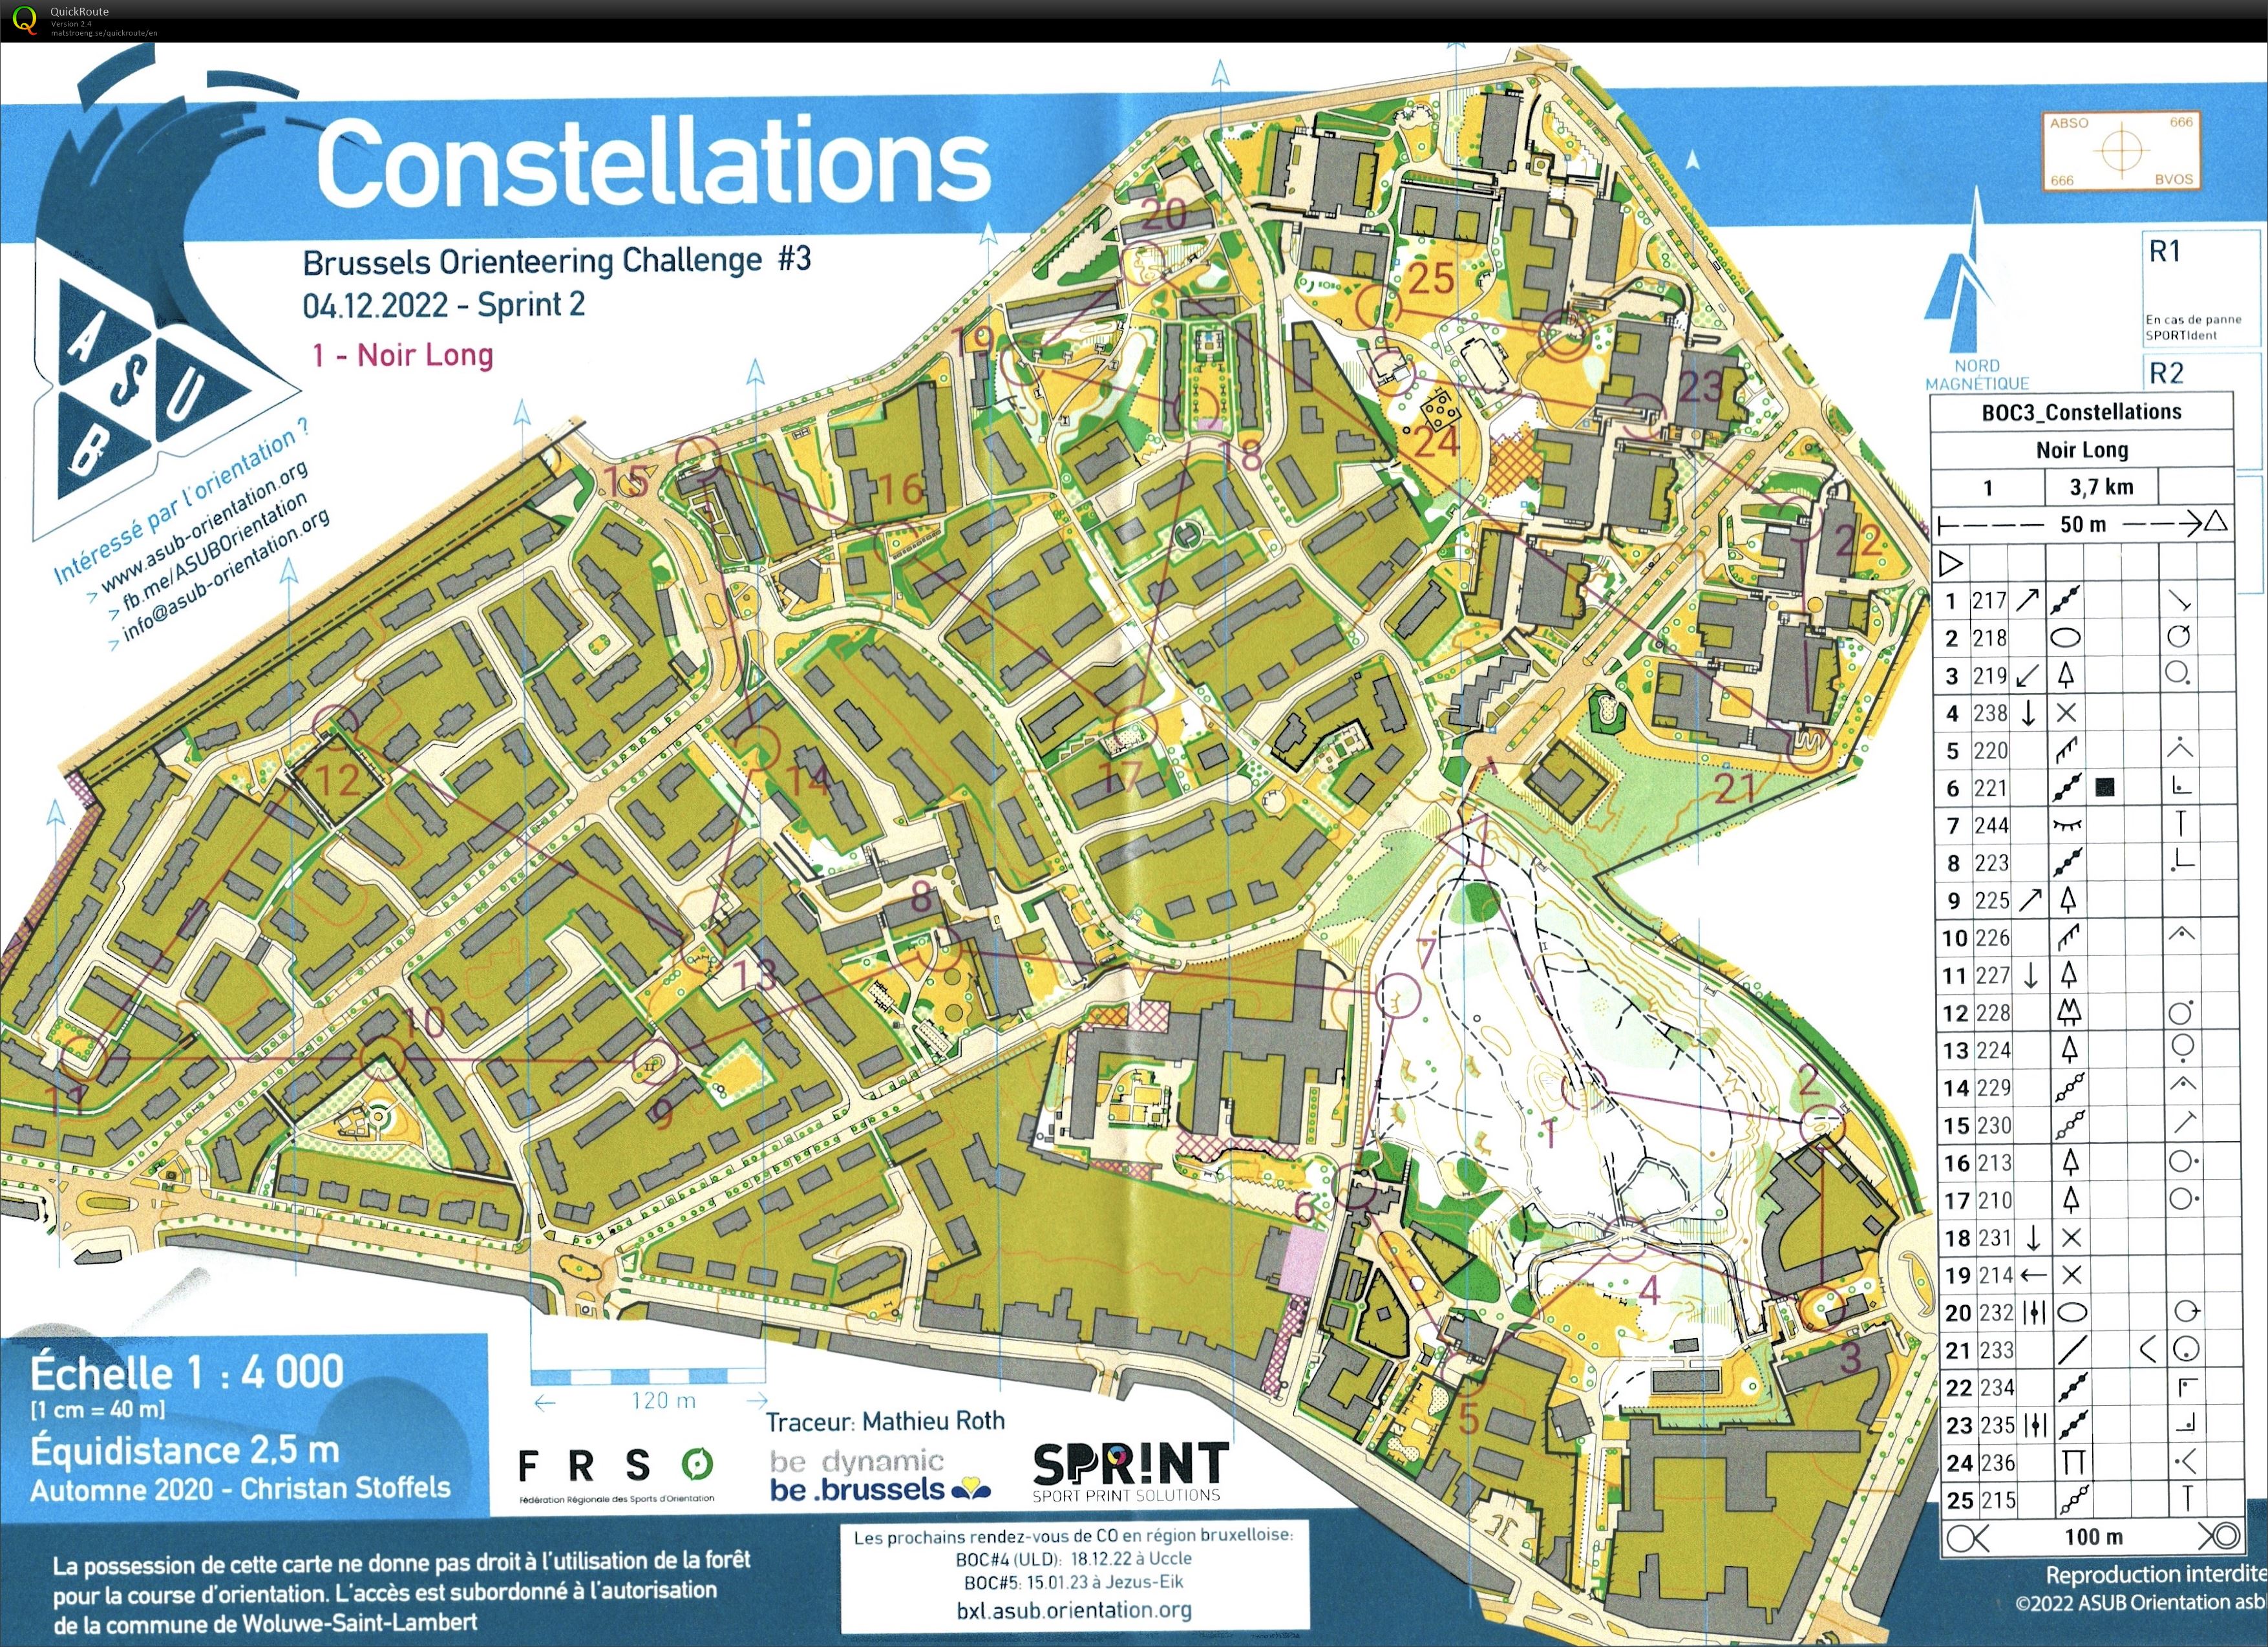 Brussels Orienteering Challenge #3 - Sprint 2 - Constellations (04.12.2022)